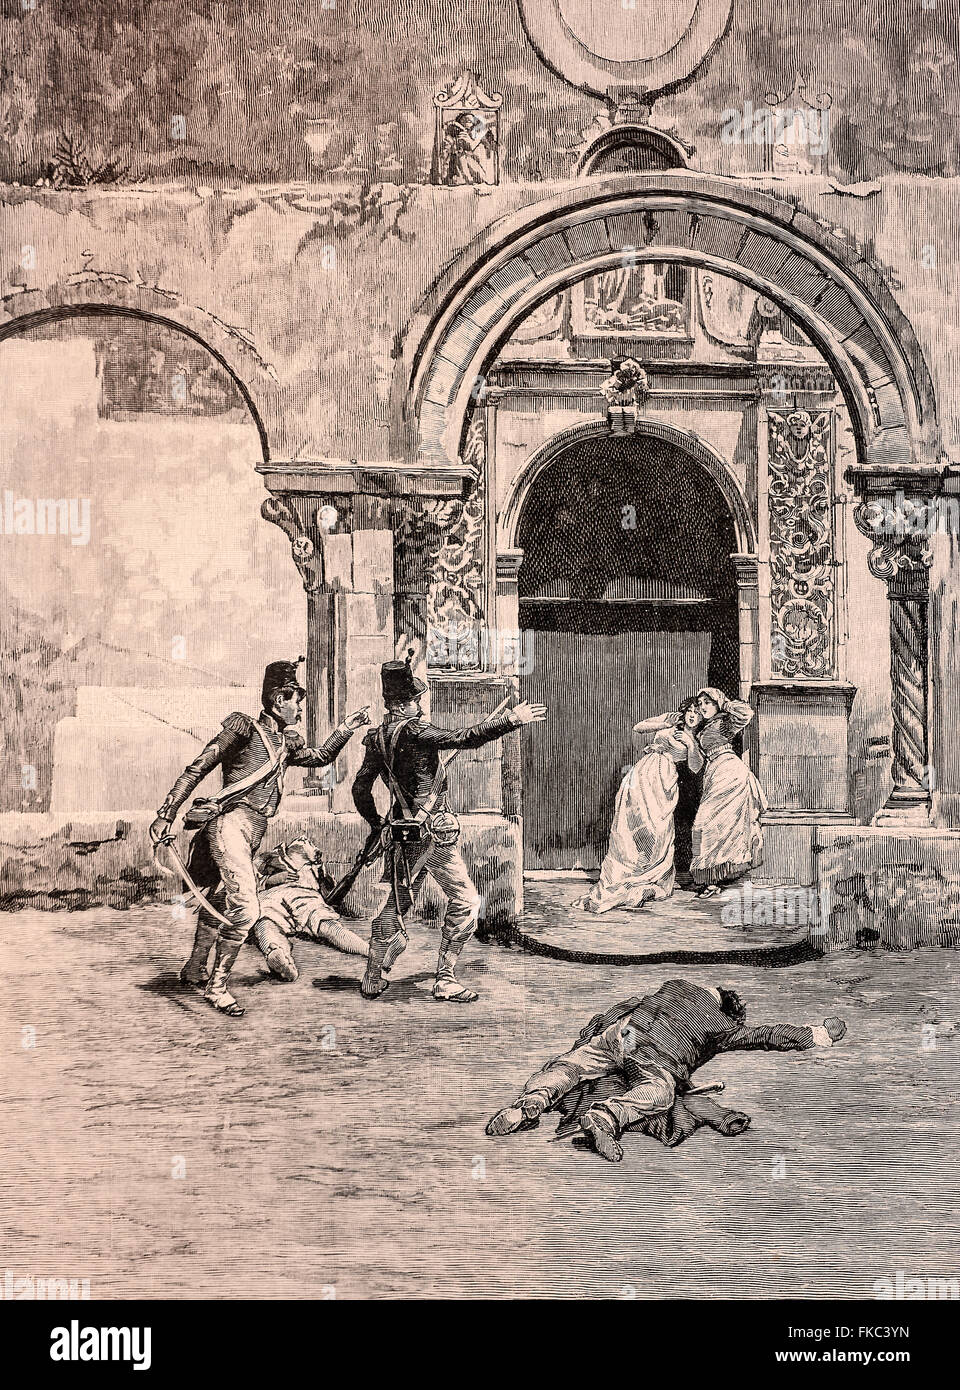 Italie Sicile Syracuse Risorgimento Italiano Les soldats de Del Carretto à Syracuse après la révolte de 1837 dans l'impression d'Edorado Matania Banque D'Images